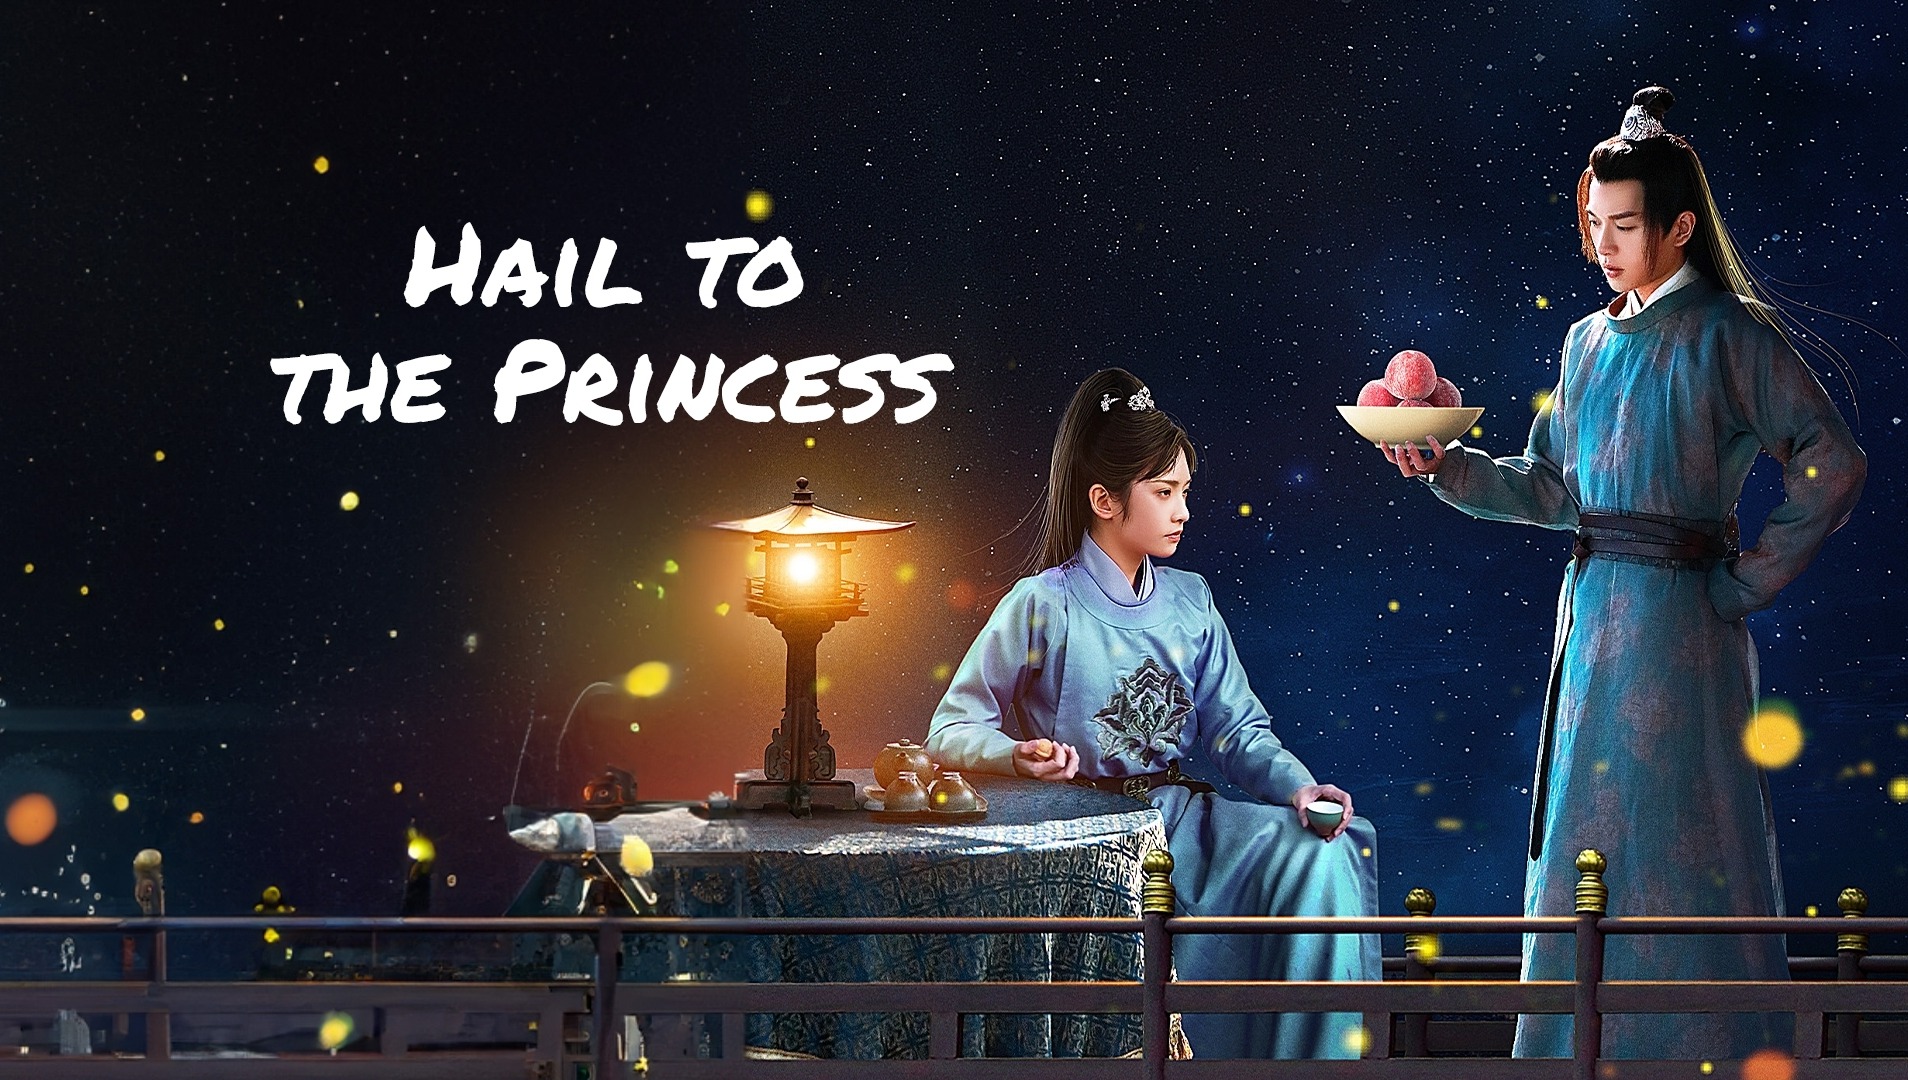 Hail to the Princess